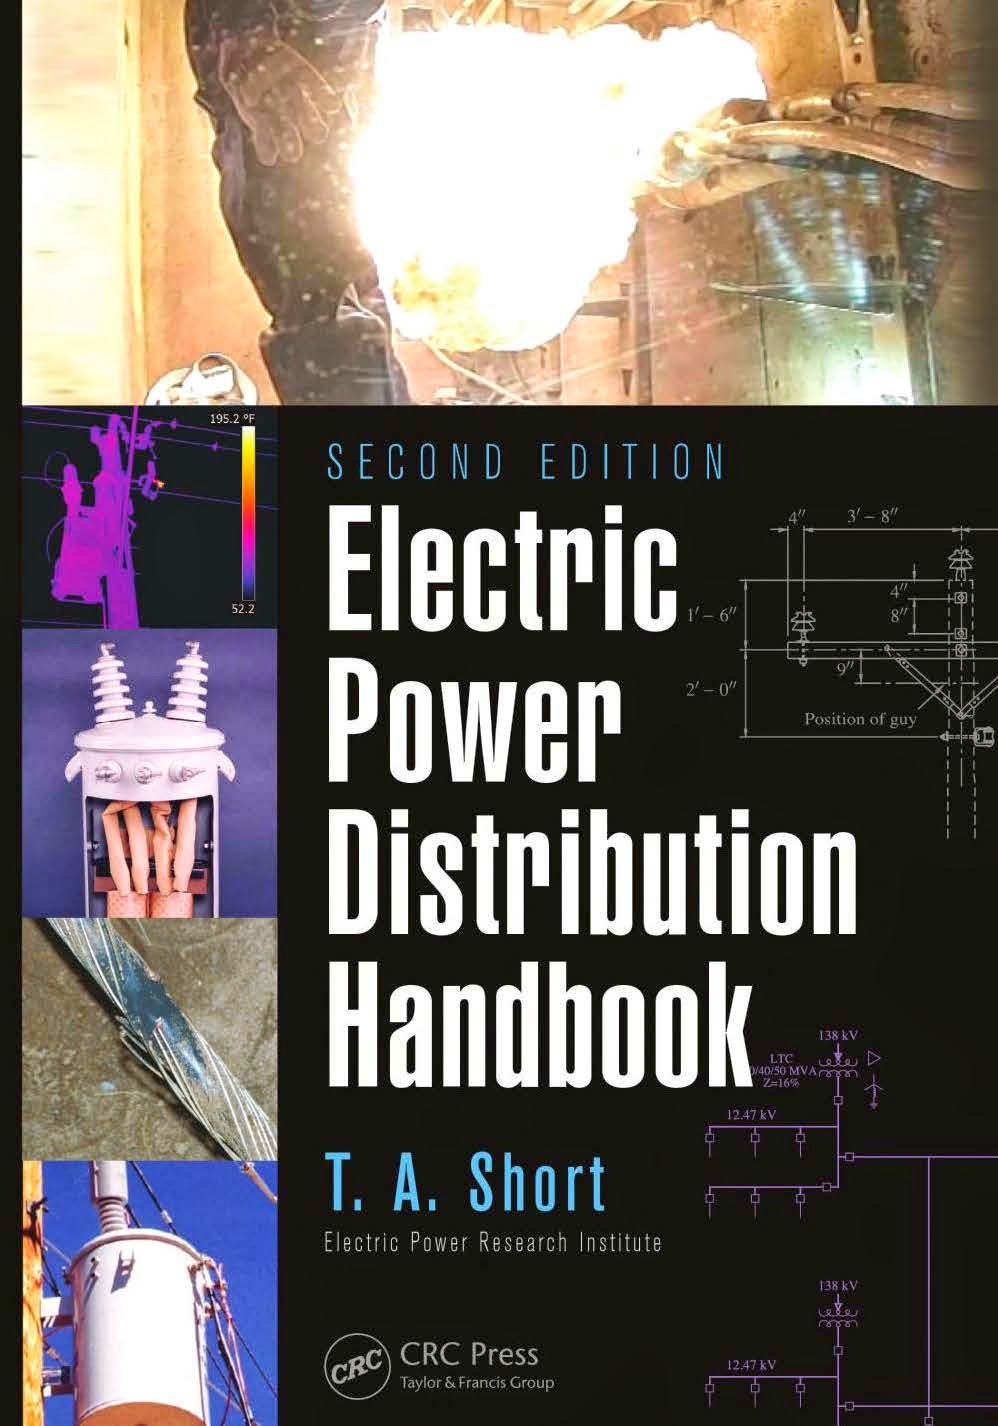 http://kingcheapebook.blogspot.com/2014/07/electric-power-distribution-handbook.html